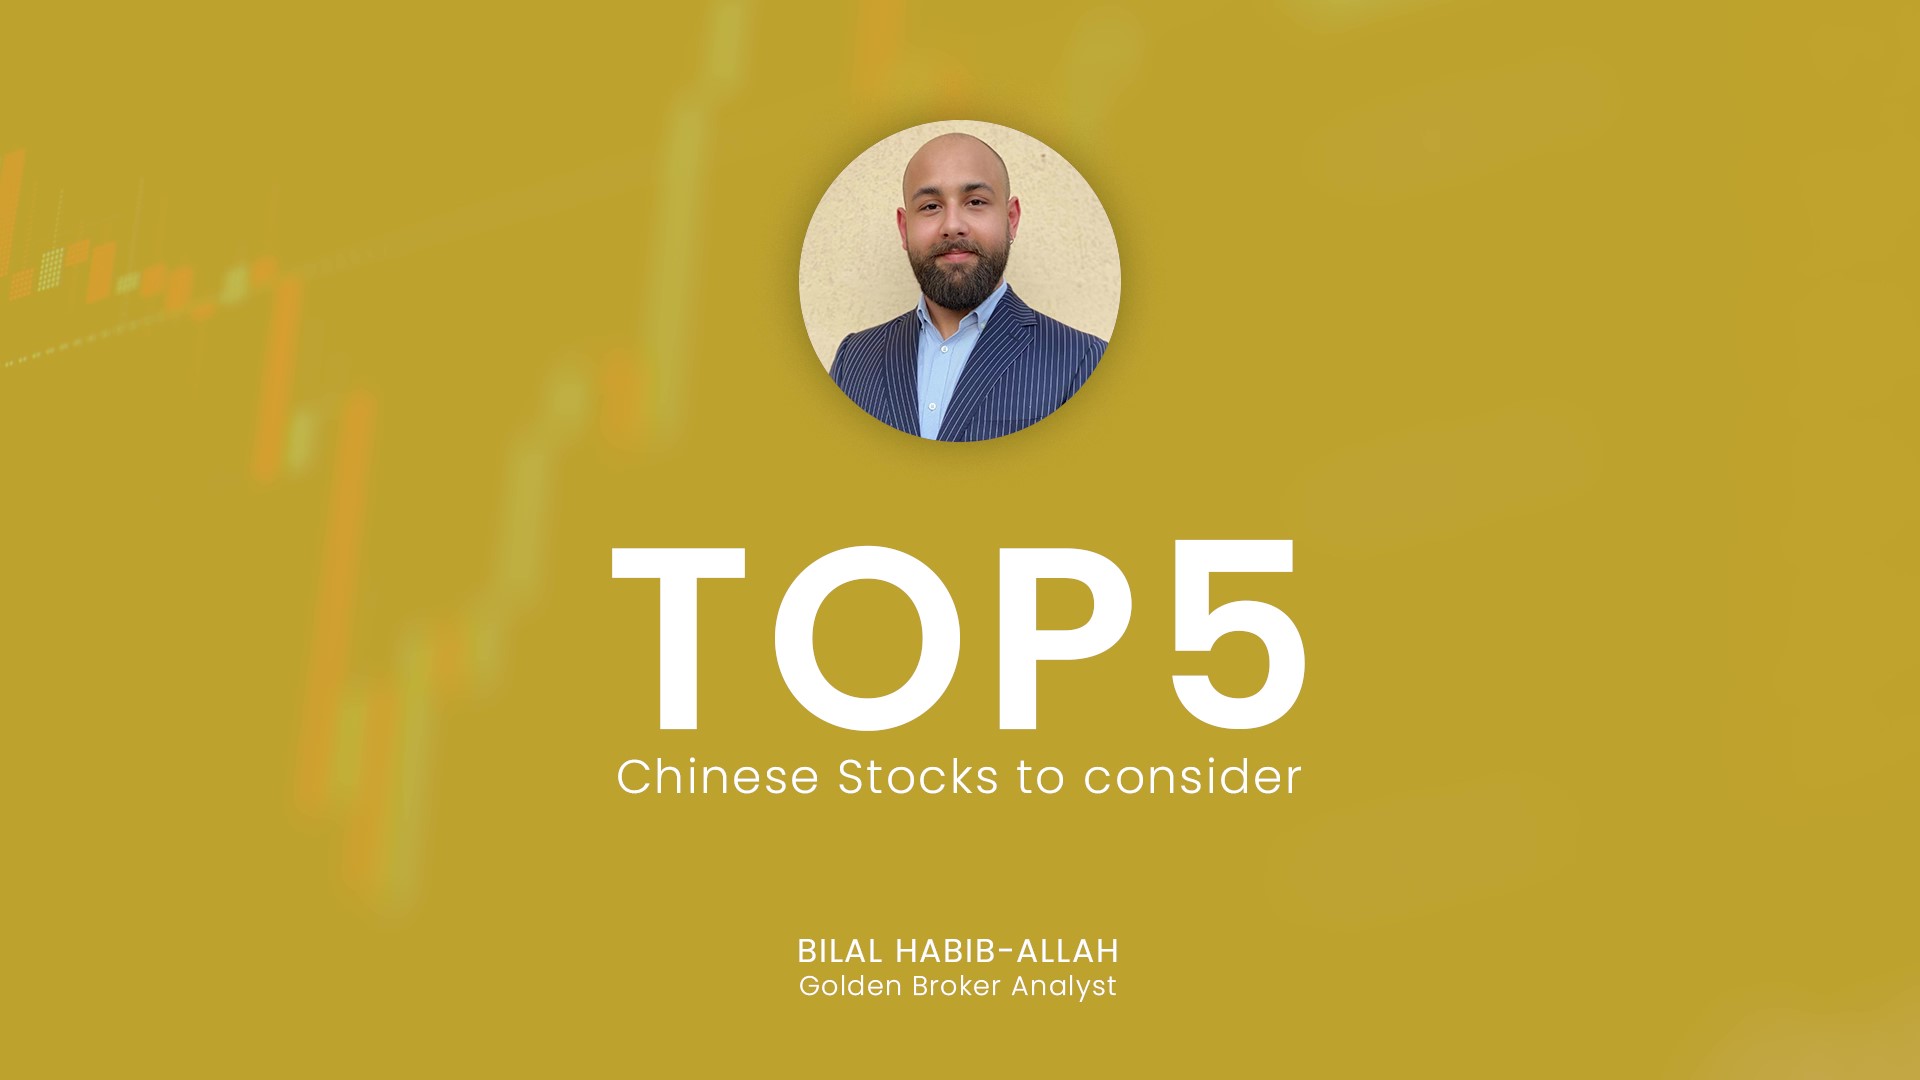 Golden Brokers | Top 5 Chinese stocks to consider | Bilal Habib - Allah